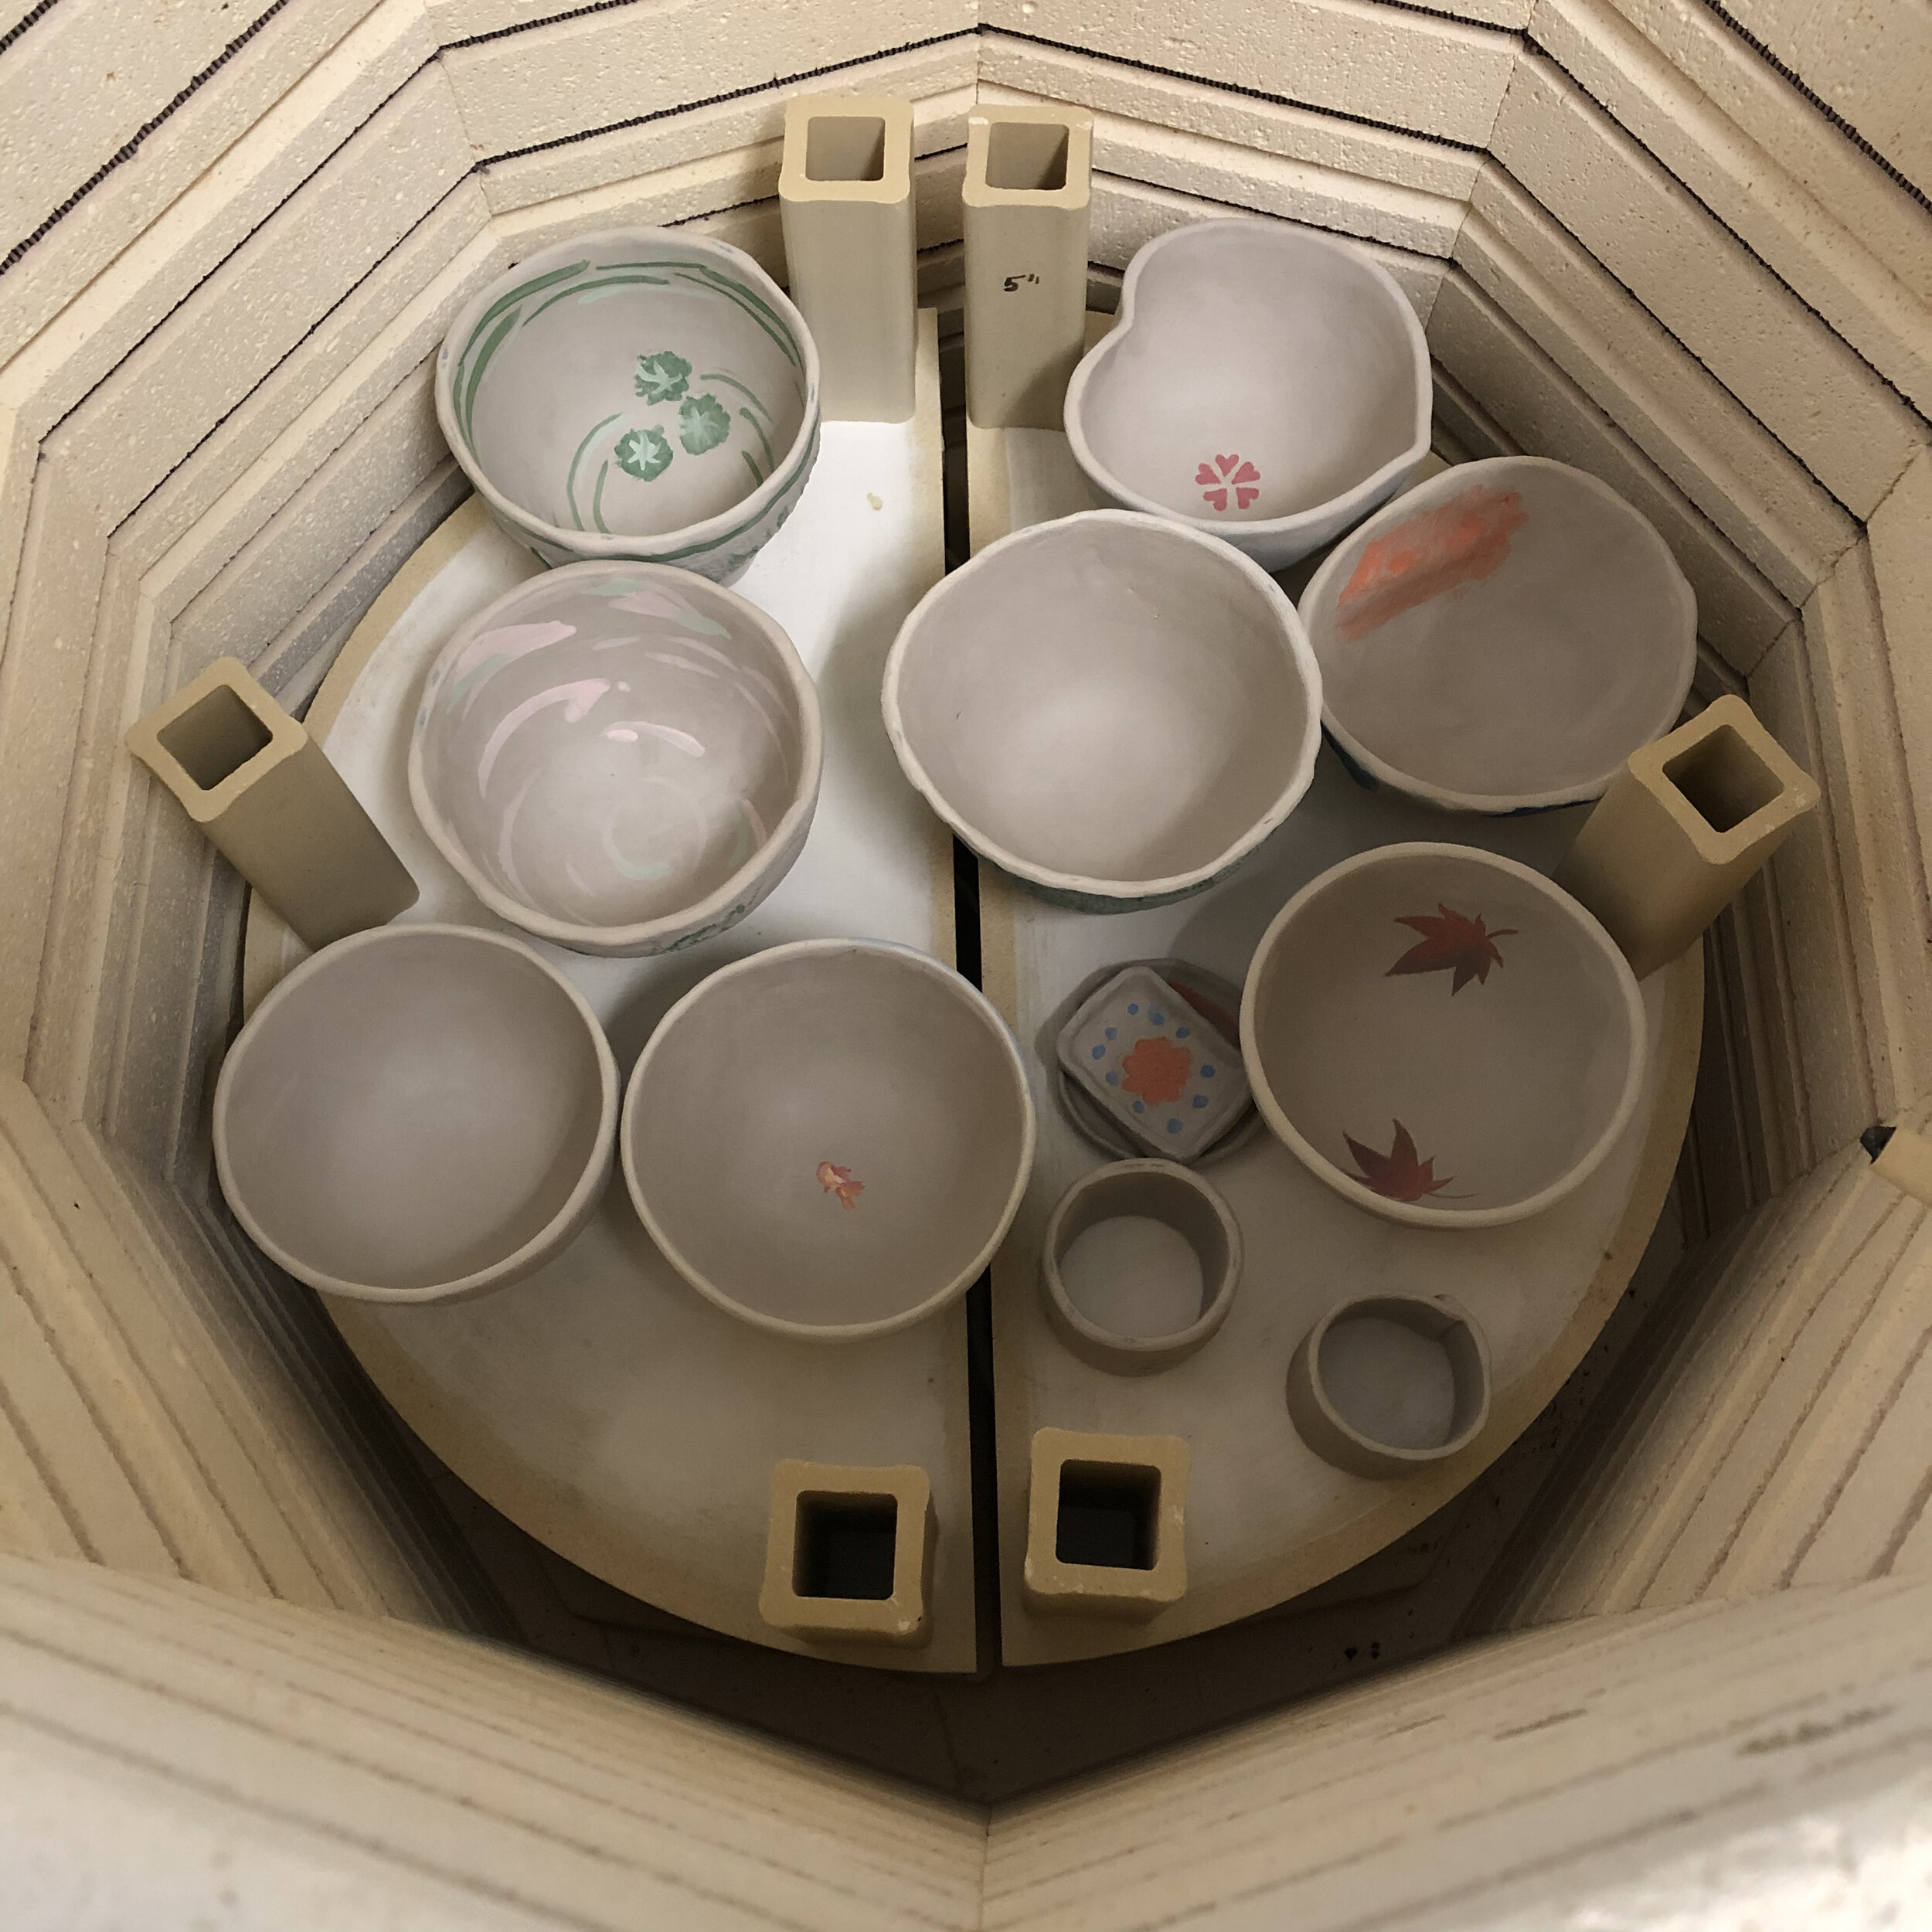 Tea bowls in the kiln before firing.